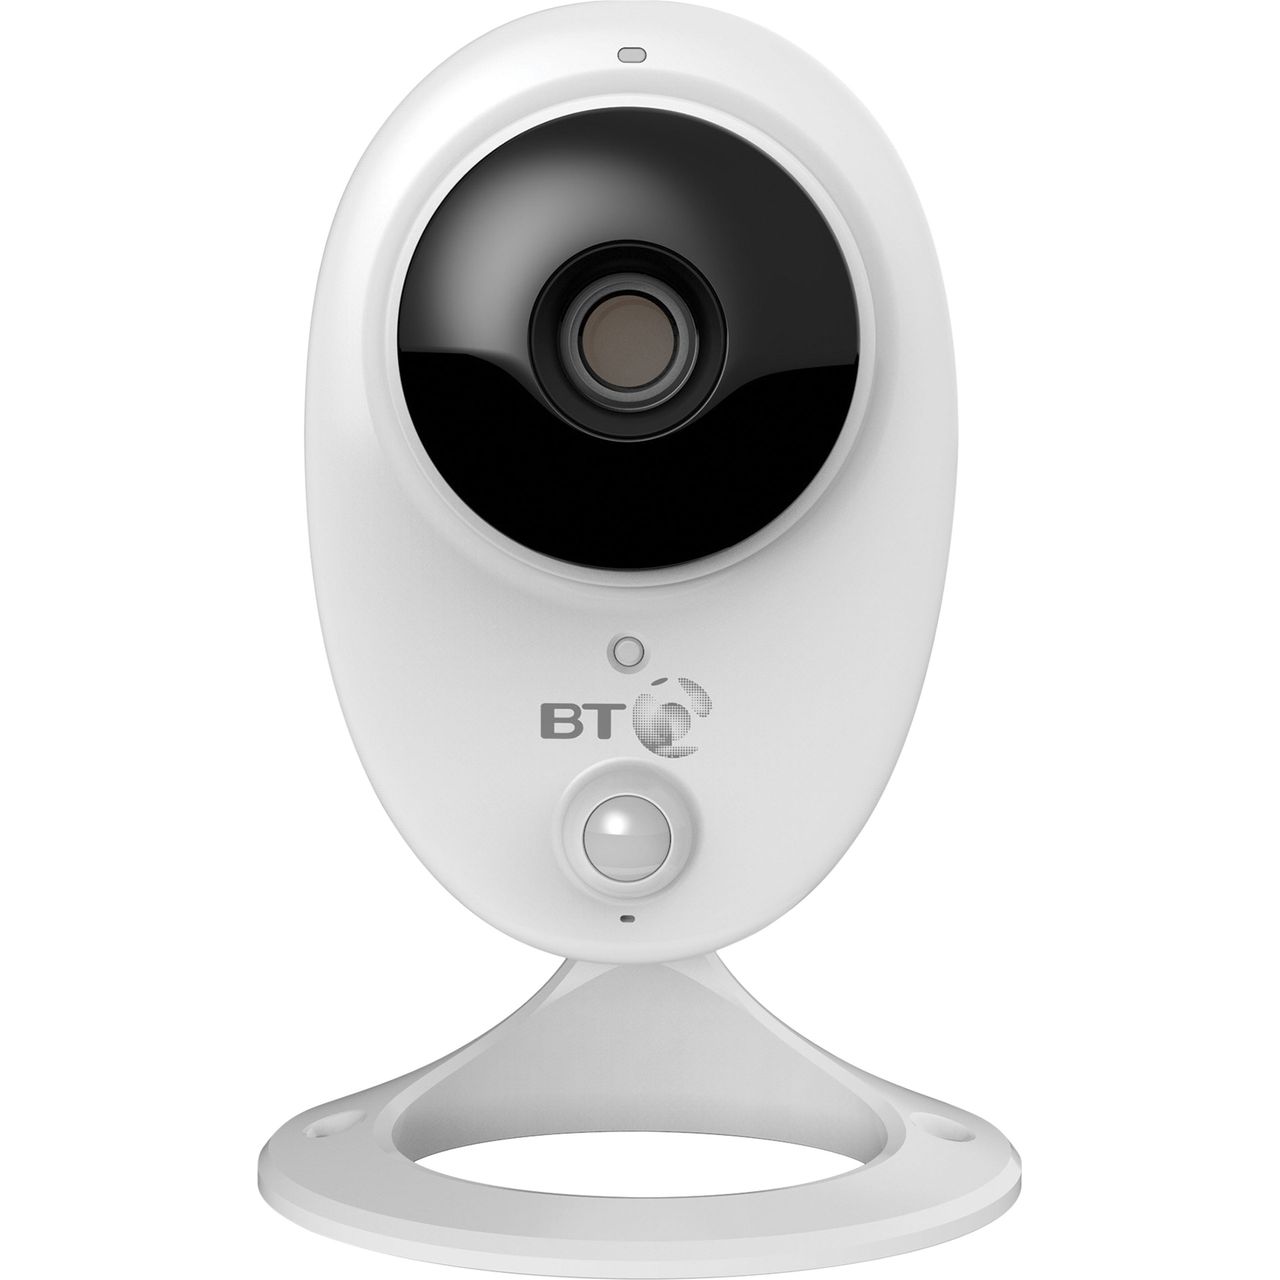 BT Smart Home Cam HD 720p Review